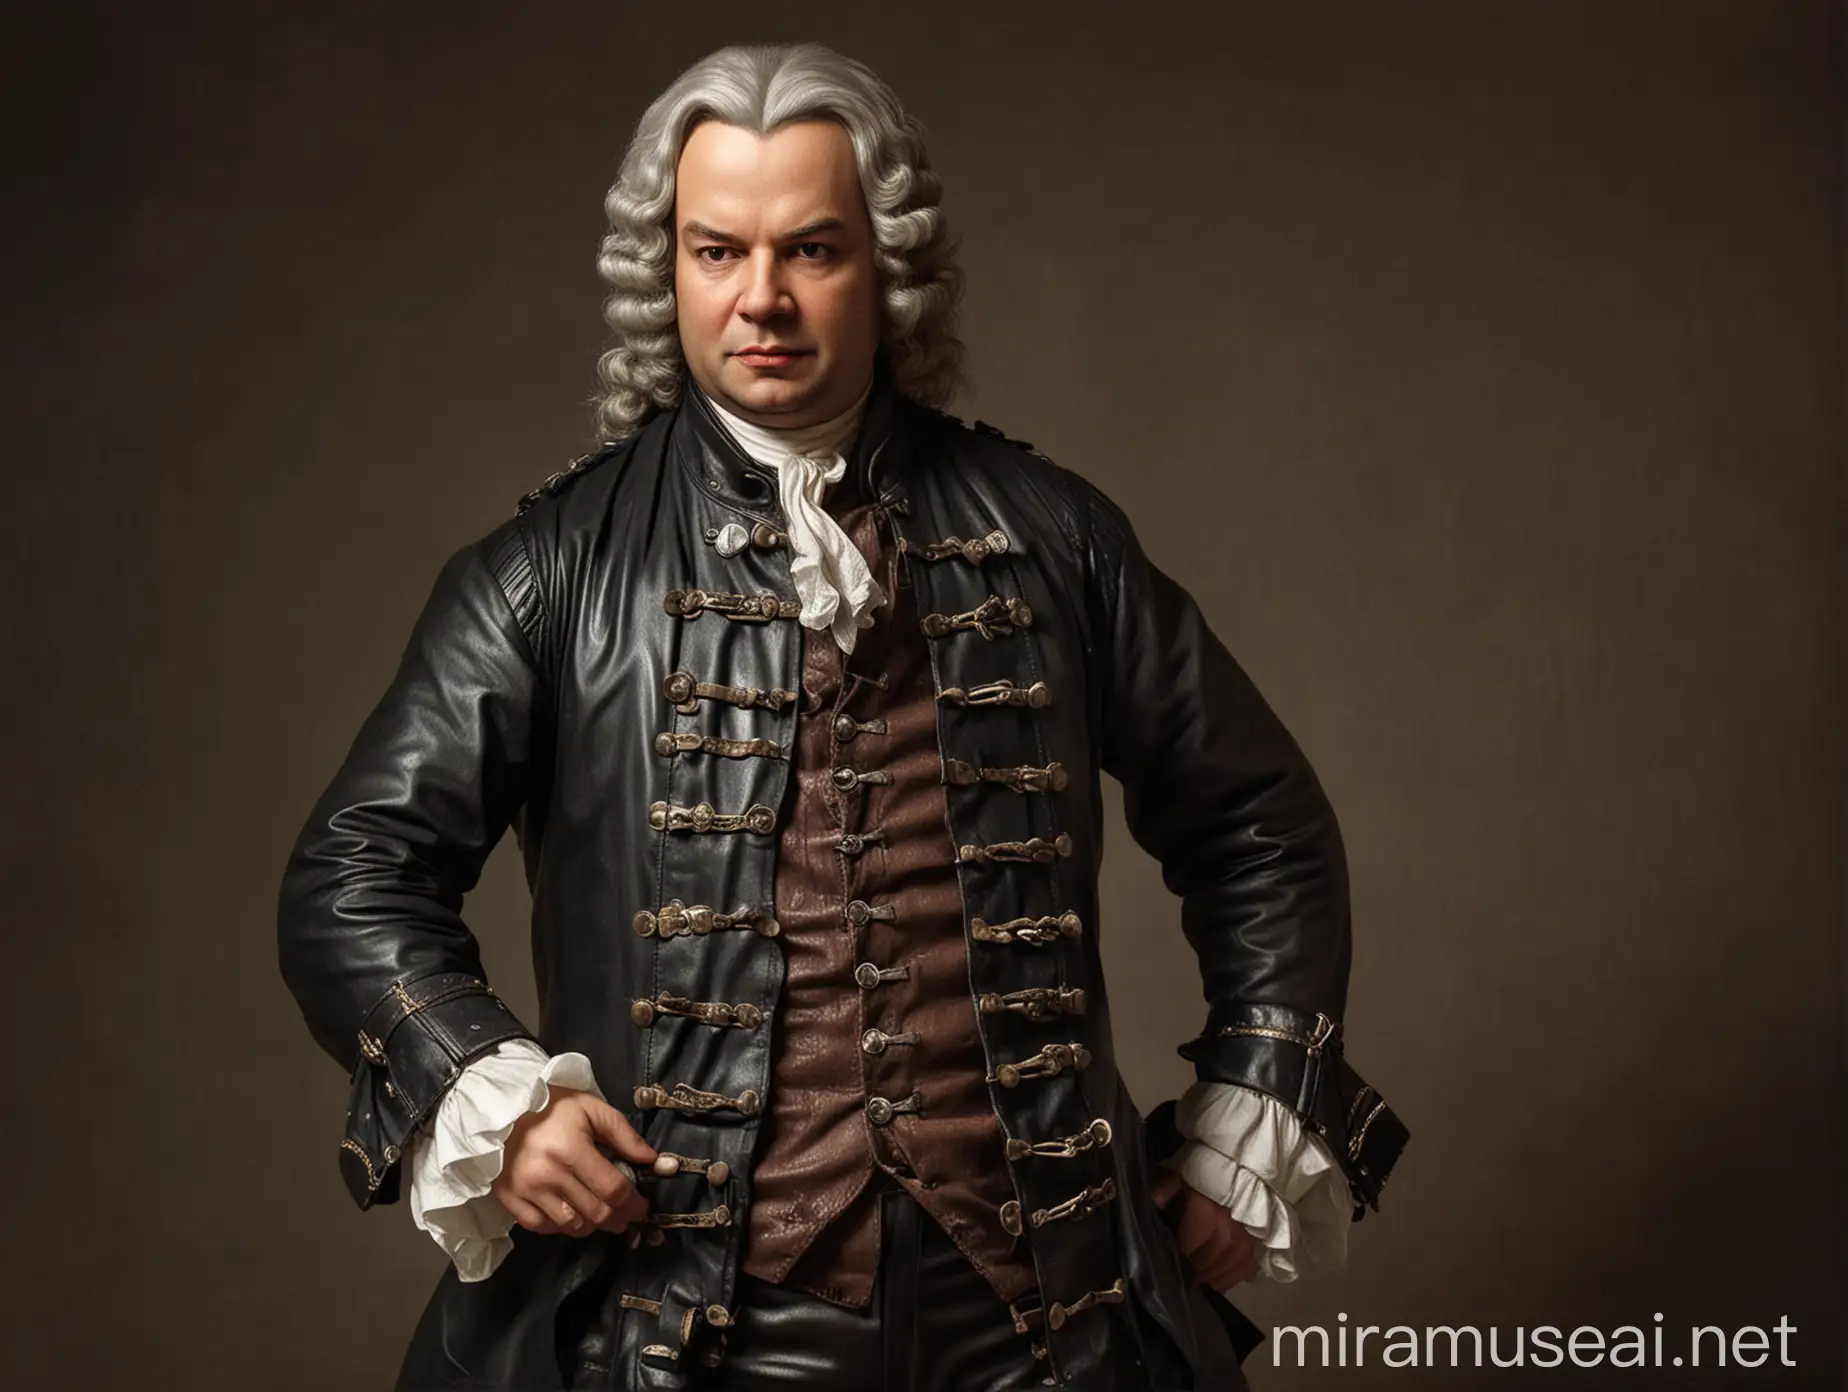 Johann Sebastian Bach in Leather Costume Performing Baroque Music